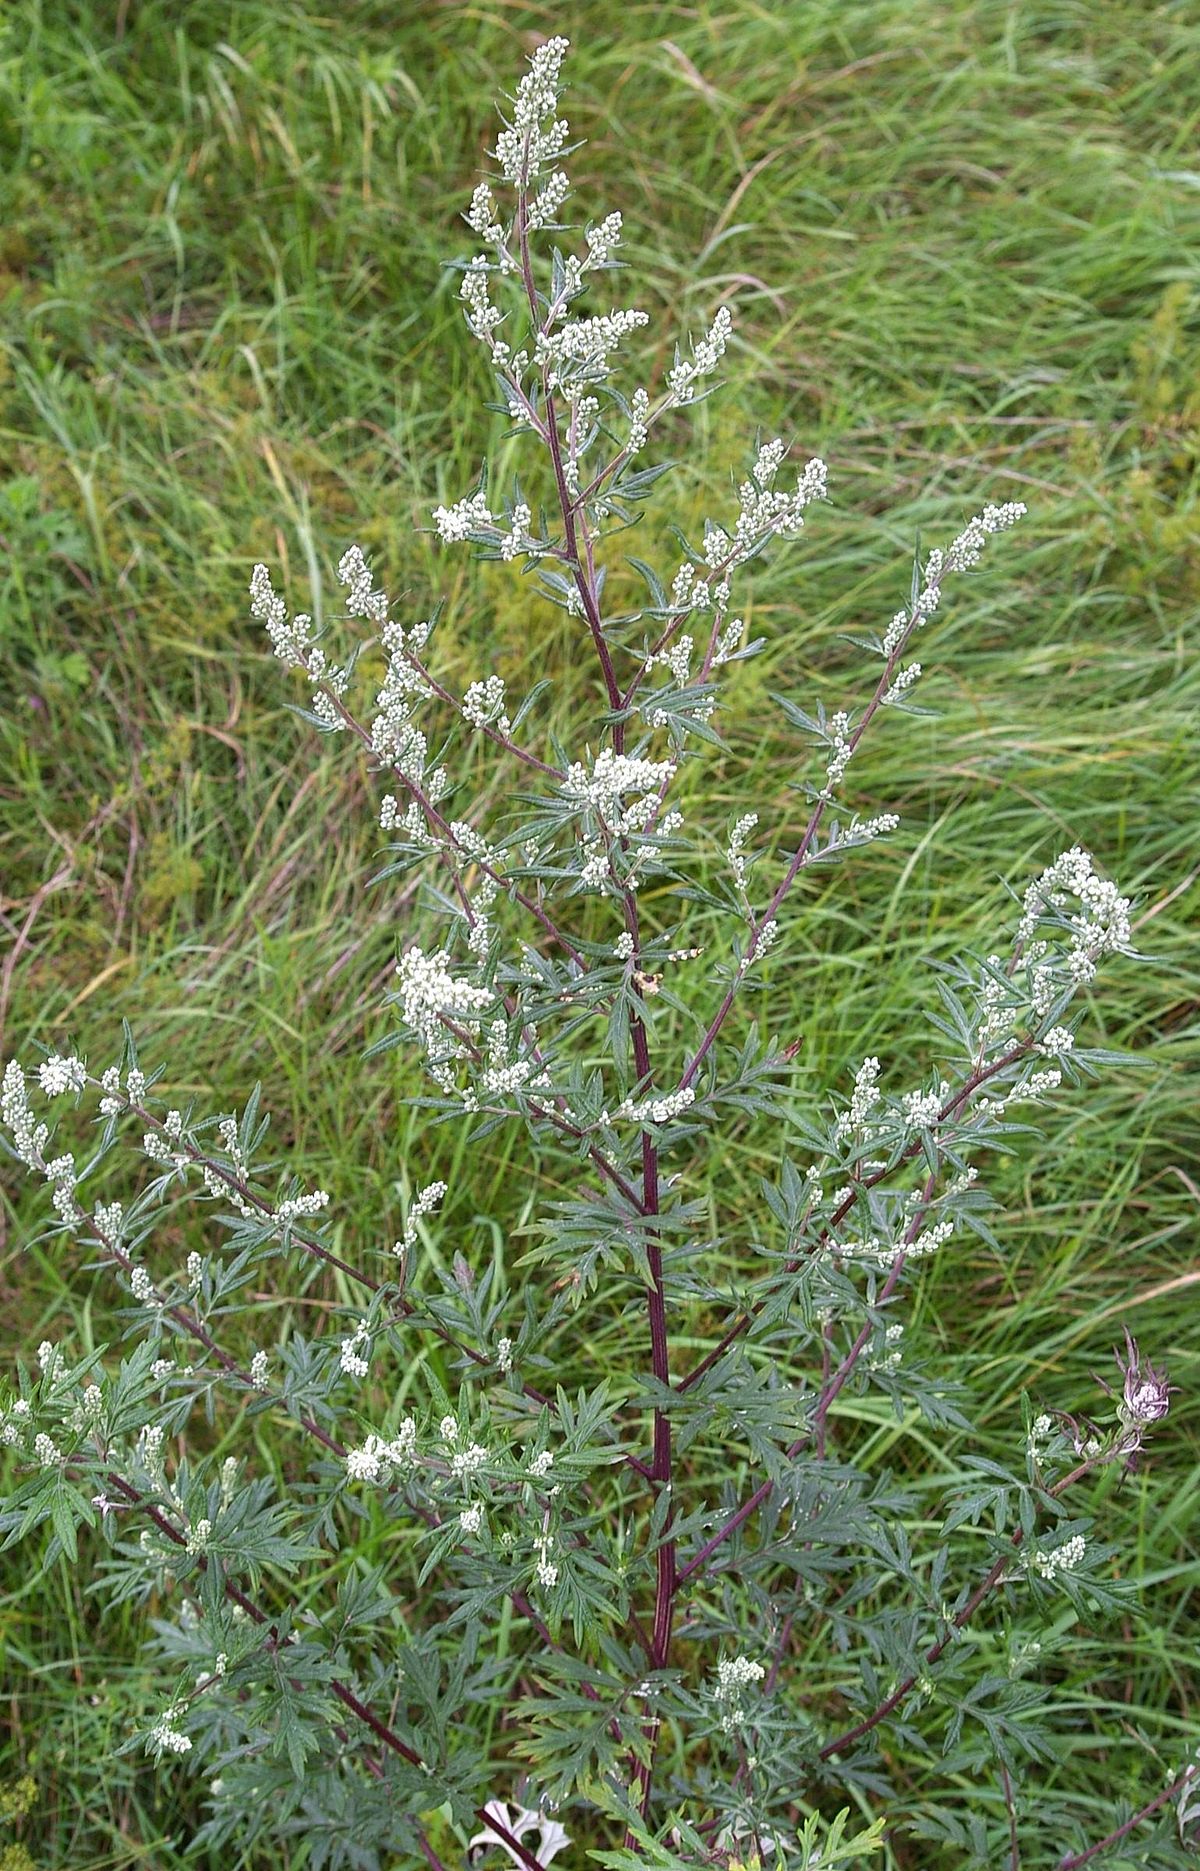 Artemisia Gattung Wikipedia